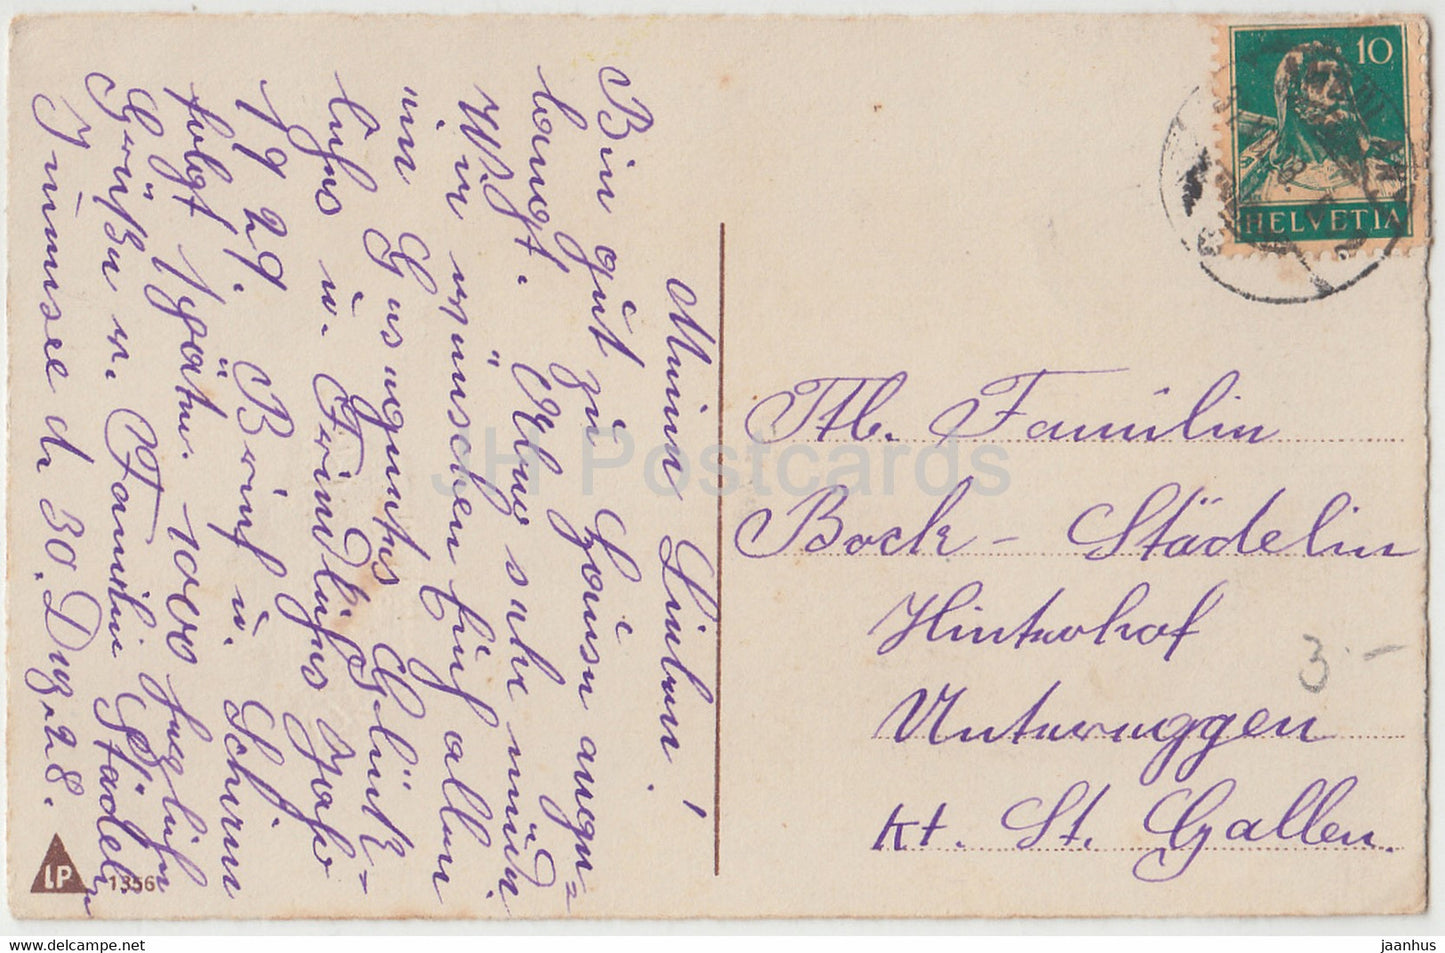 Carte de vœux du Nouvel An - Herzlichen Gluckwunsch zum Neuen Jahre - LP 1356 - carte postale ancienne - 1928 - Allemagne - utilisé